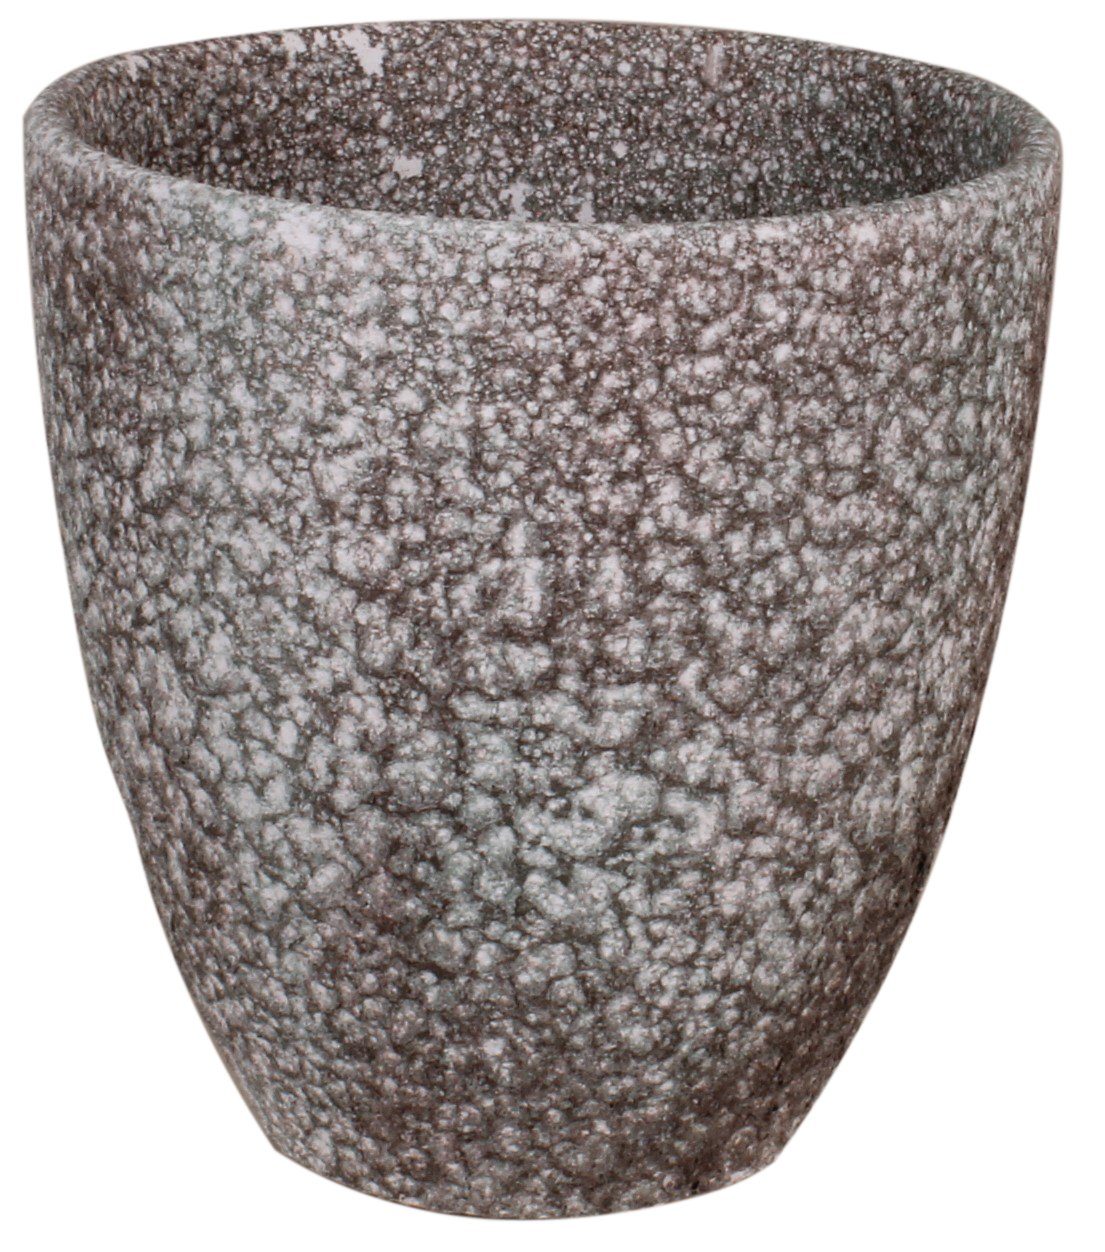 Übertopf mit tegawo Vase Vulcano Struktur konisch handgefertigt in Steinoptik Portugal, Multicolor